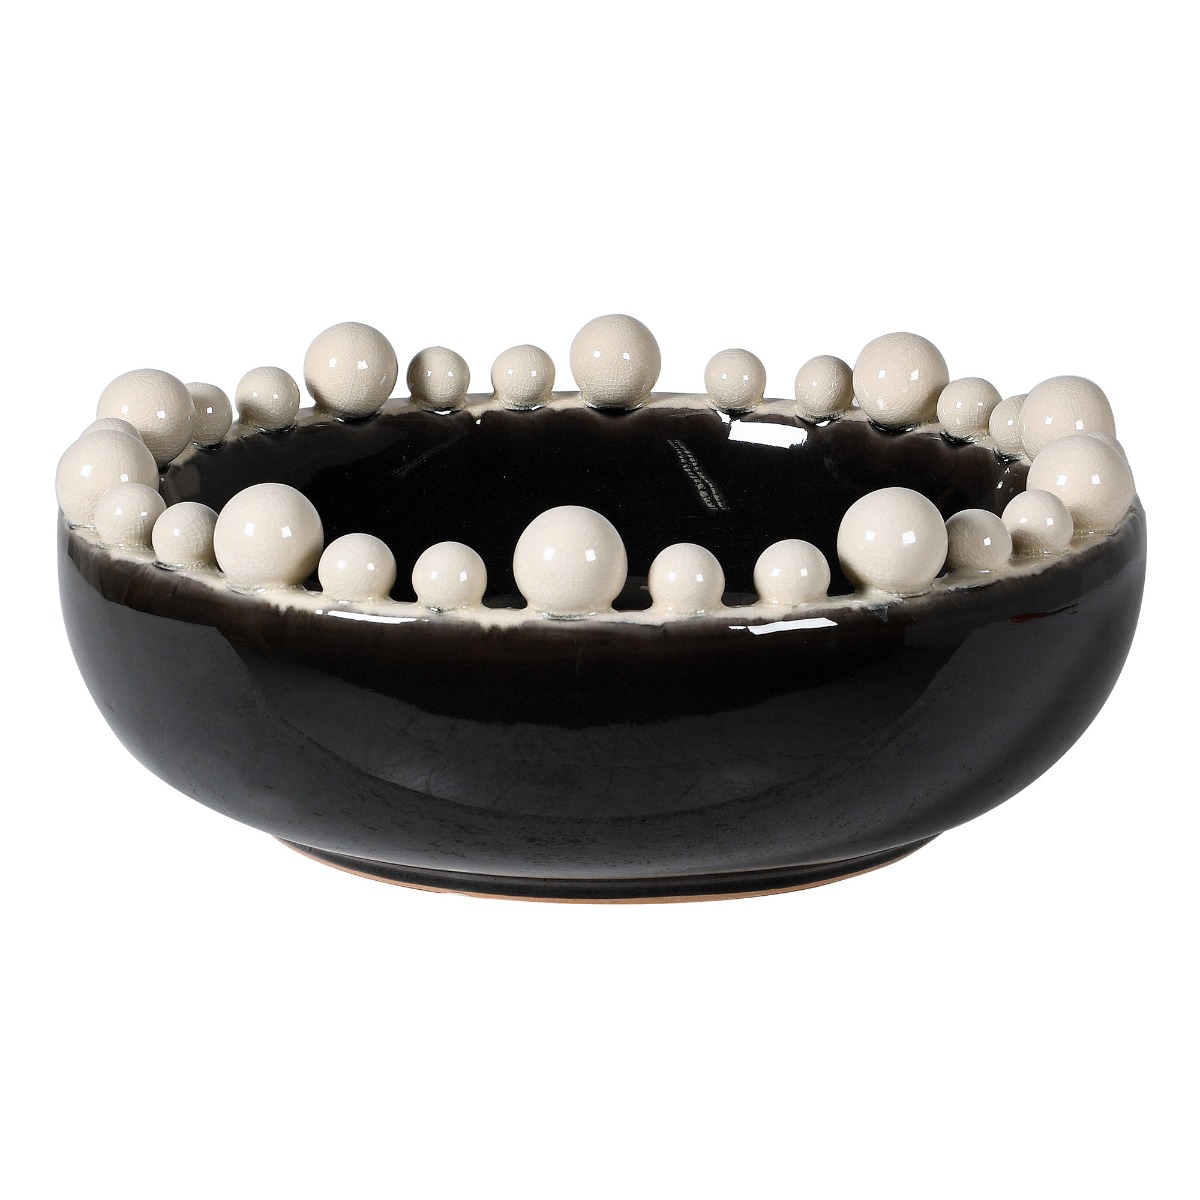 Monochrome Bowl, Black Ceramic | Barker & Stonehouse